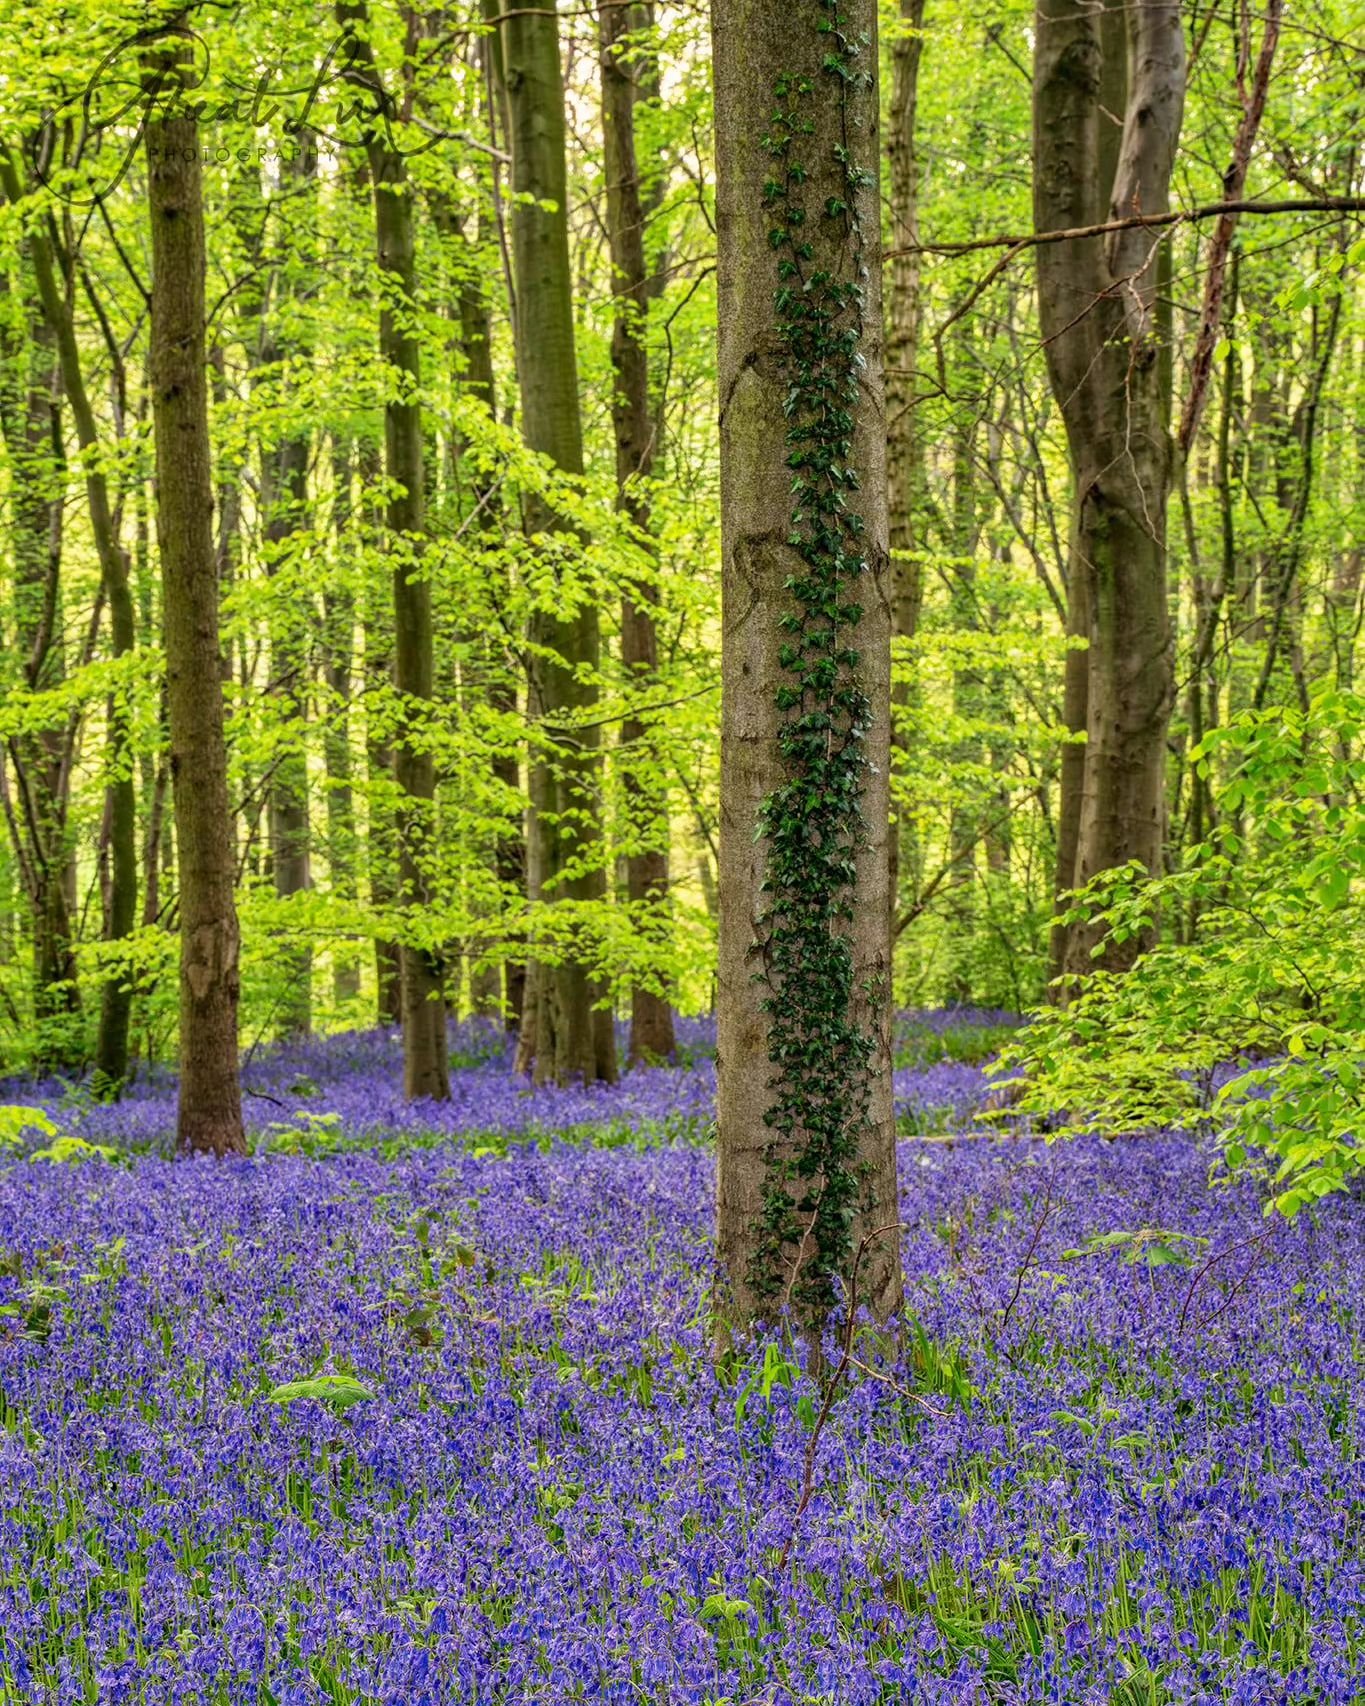 Carpet of Blue

#bluebells #flowersofinstagram #carpetofbluebells #derbyshire